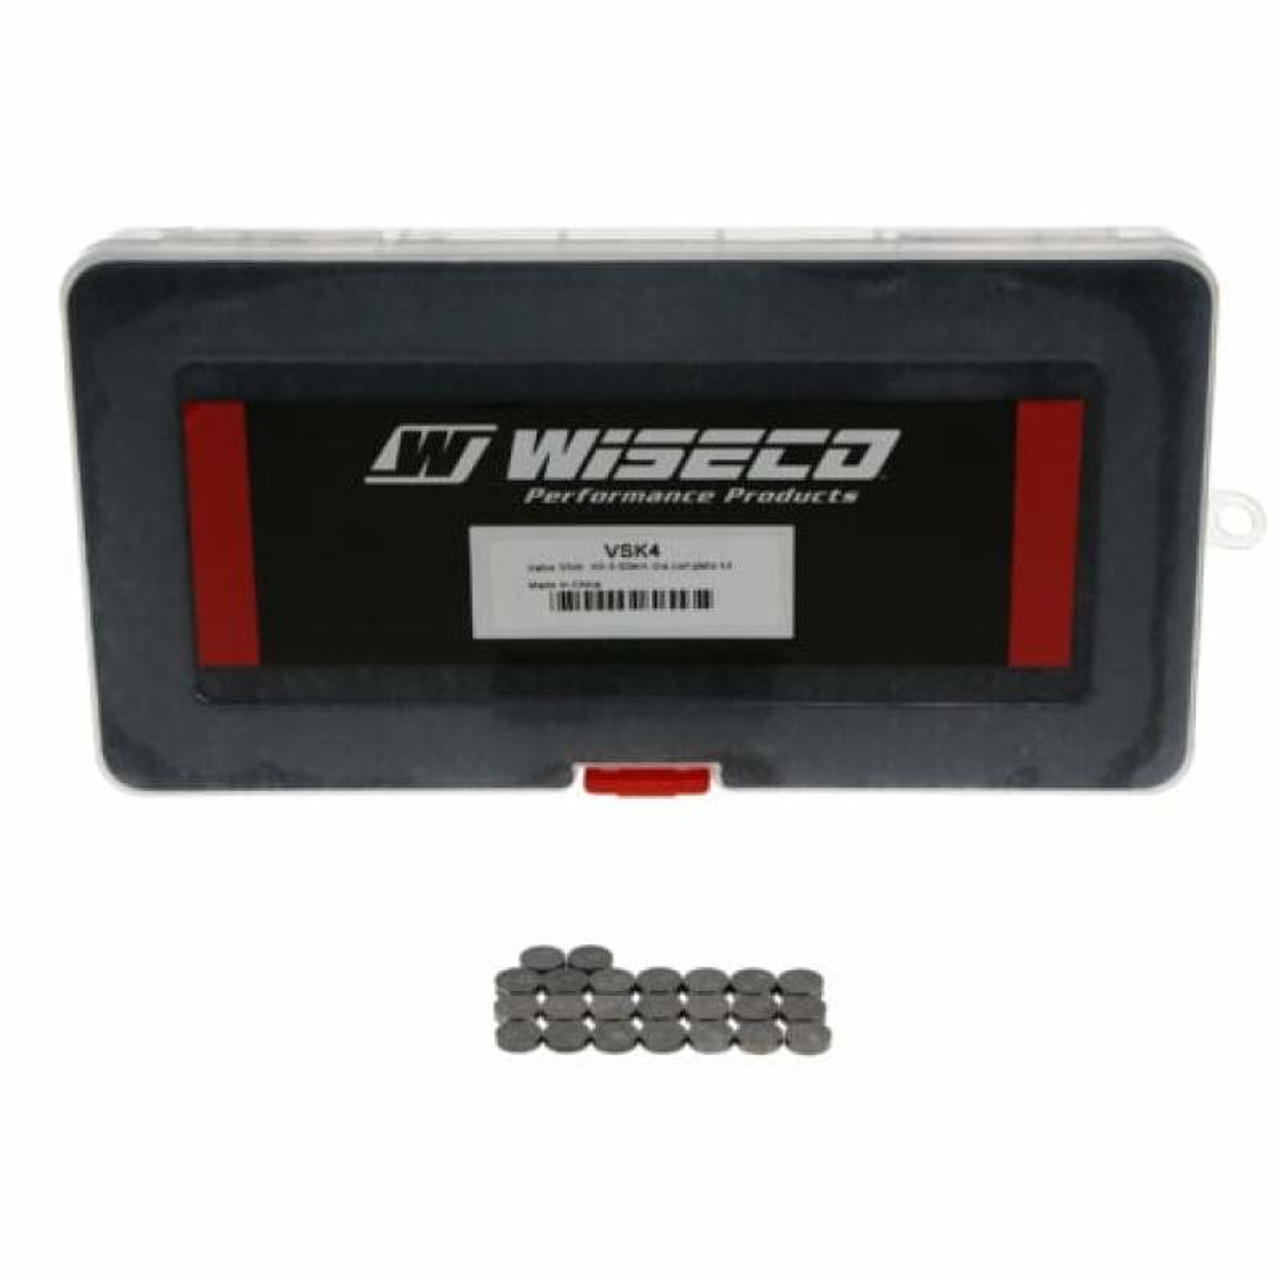 Wiseco BMW S54 3.2L / Powersports 8.9mm Valve Adjustment Shim Kit - VSK4 Photo - Primary